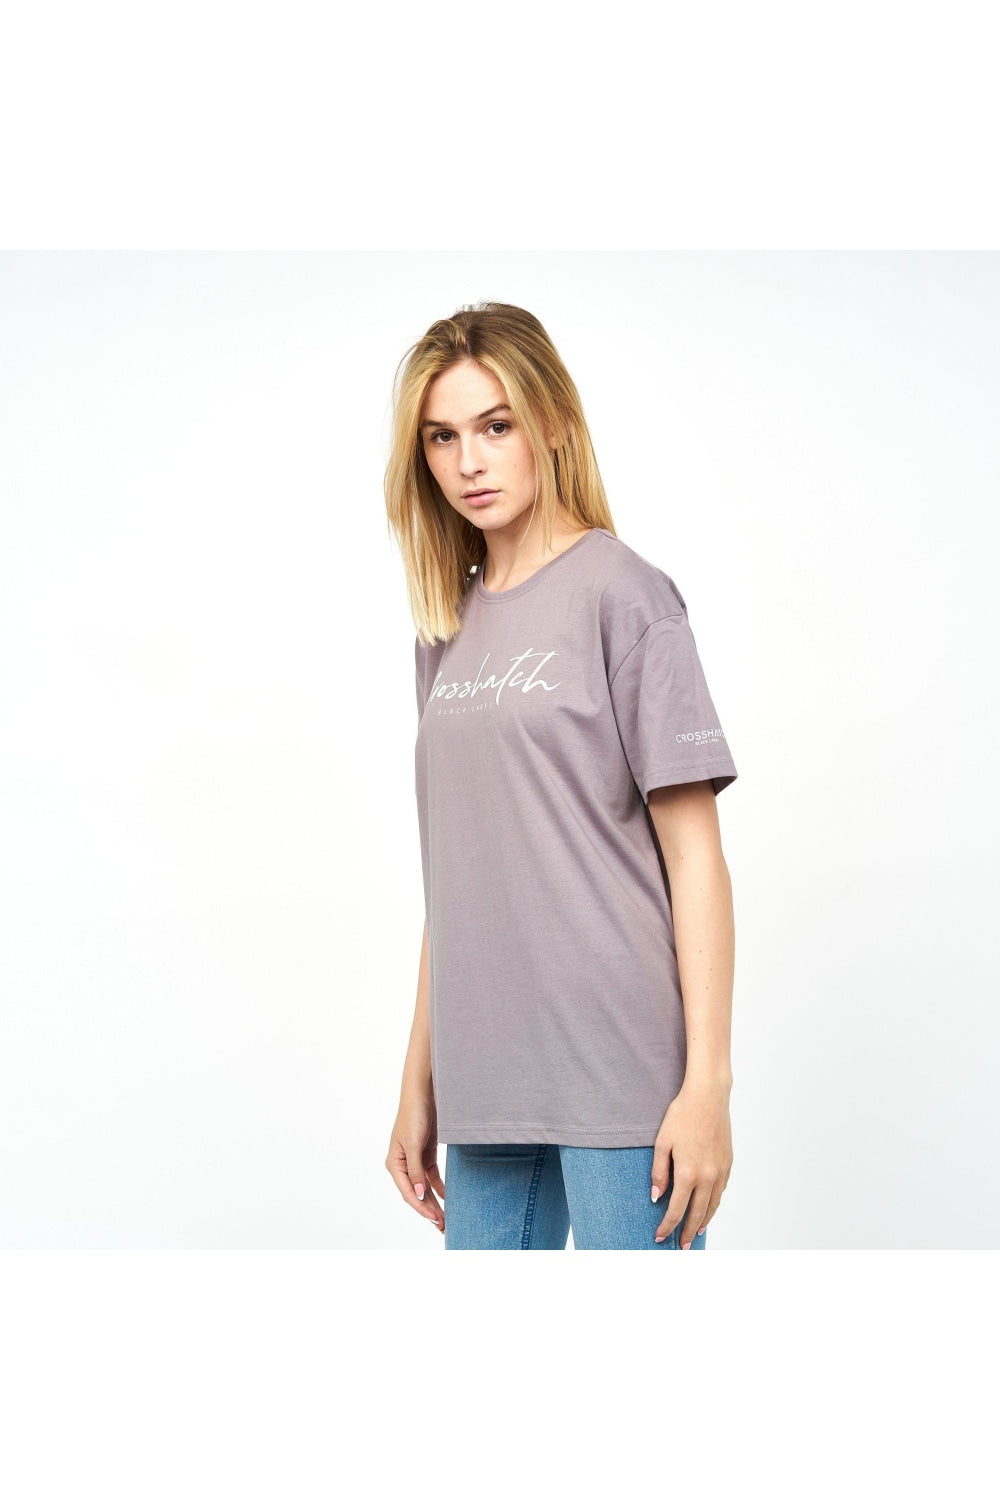 Womens/Ladies Melbrooks T-Shirt - Quicksilver